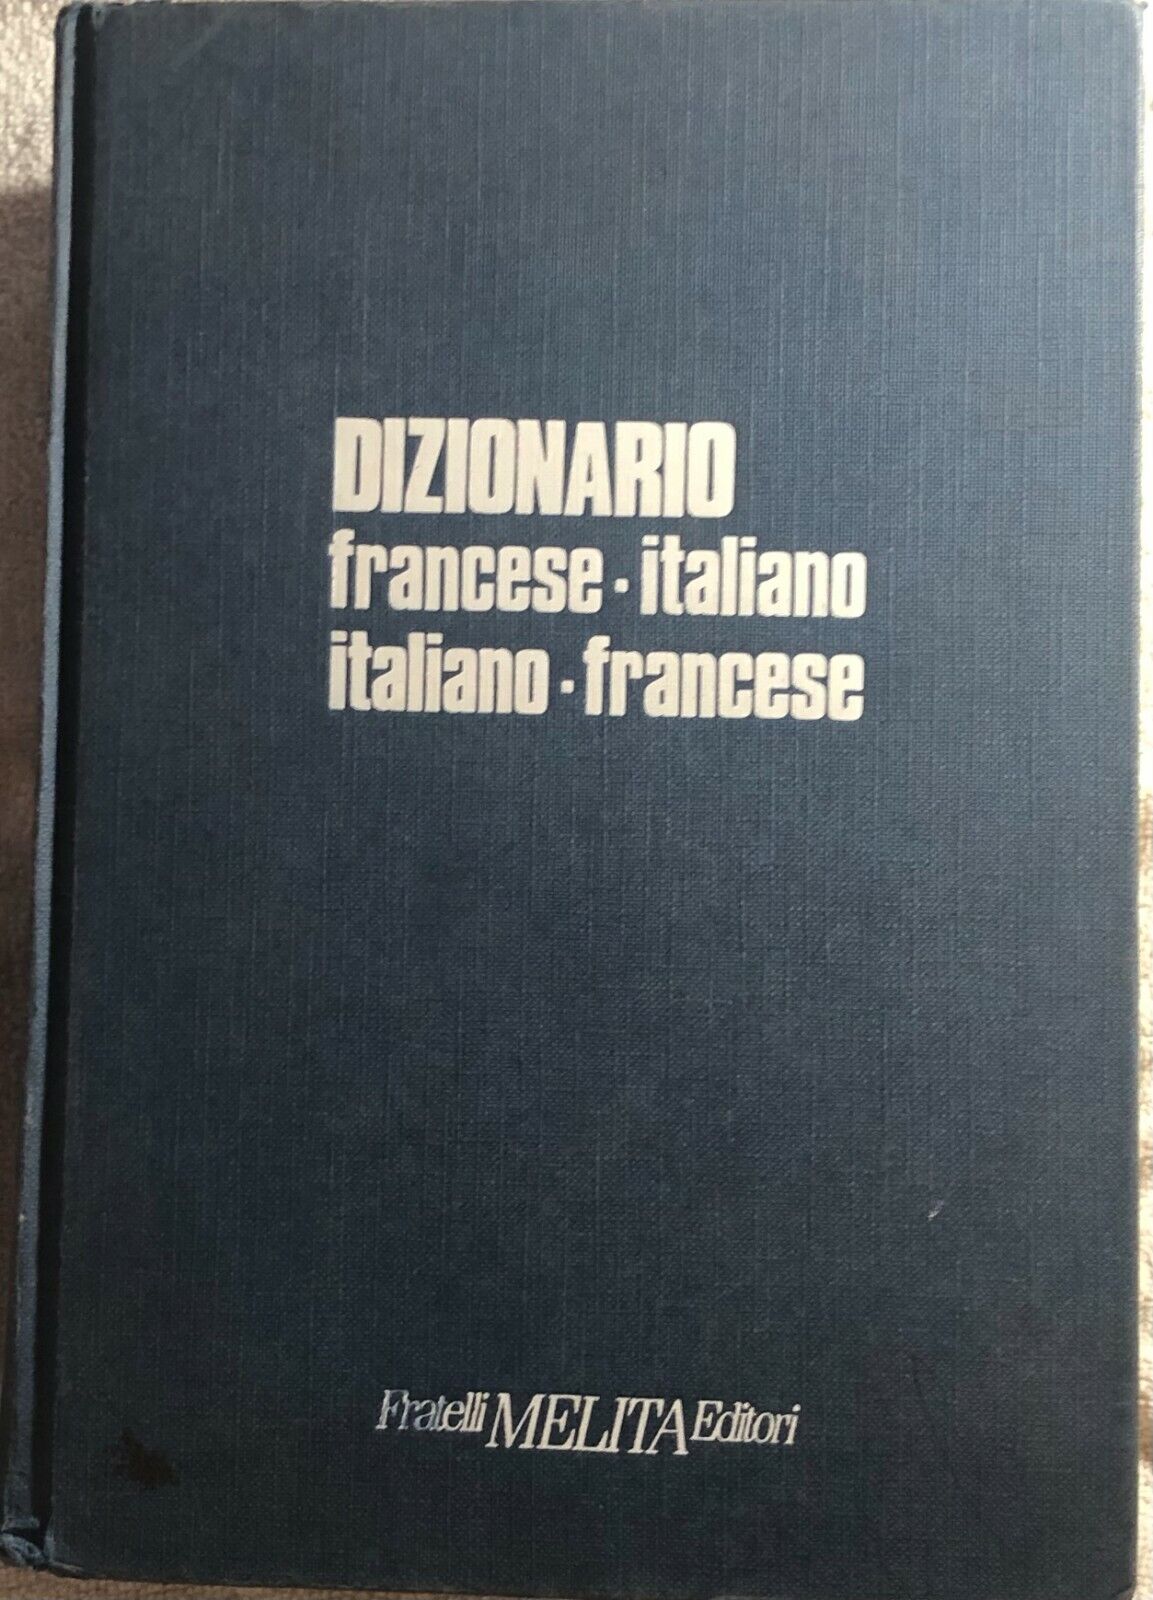 Dizionario Francese-Italiano Italiano-Francese di Aa.vv.,  1992,  Fratelli Melit